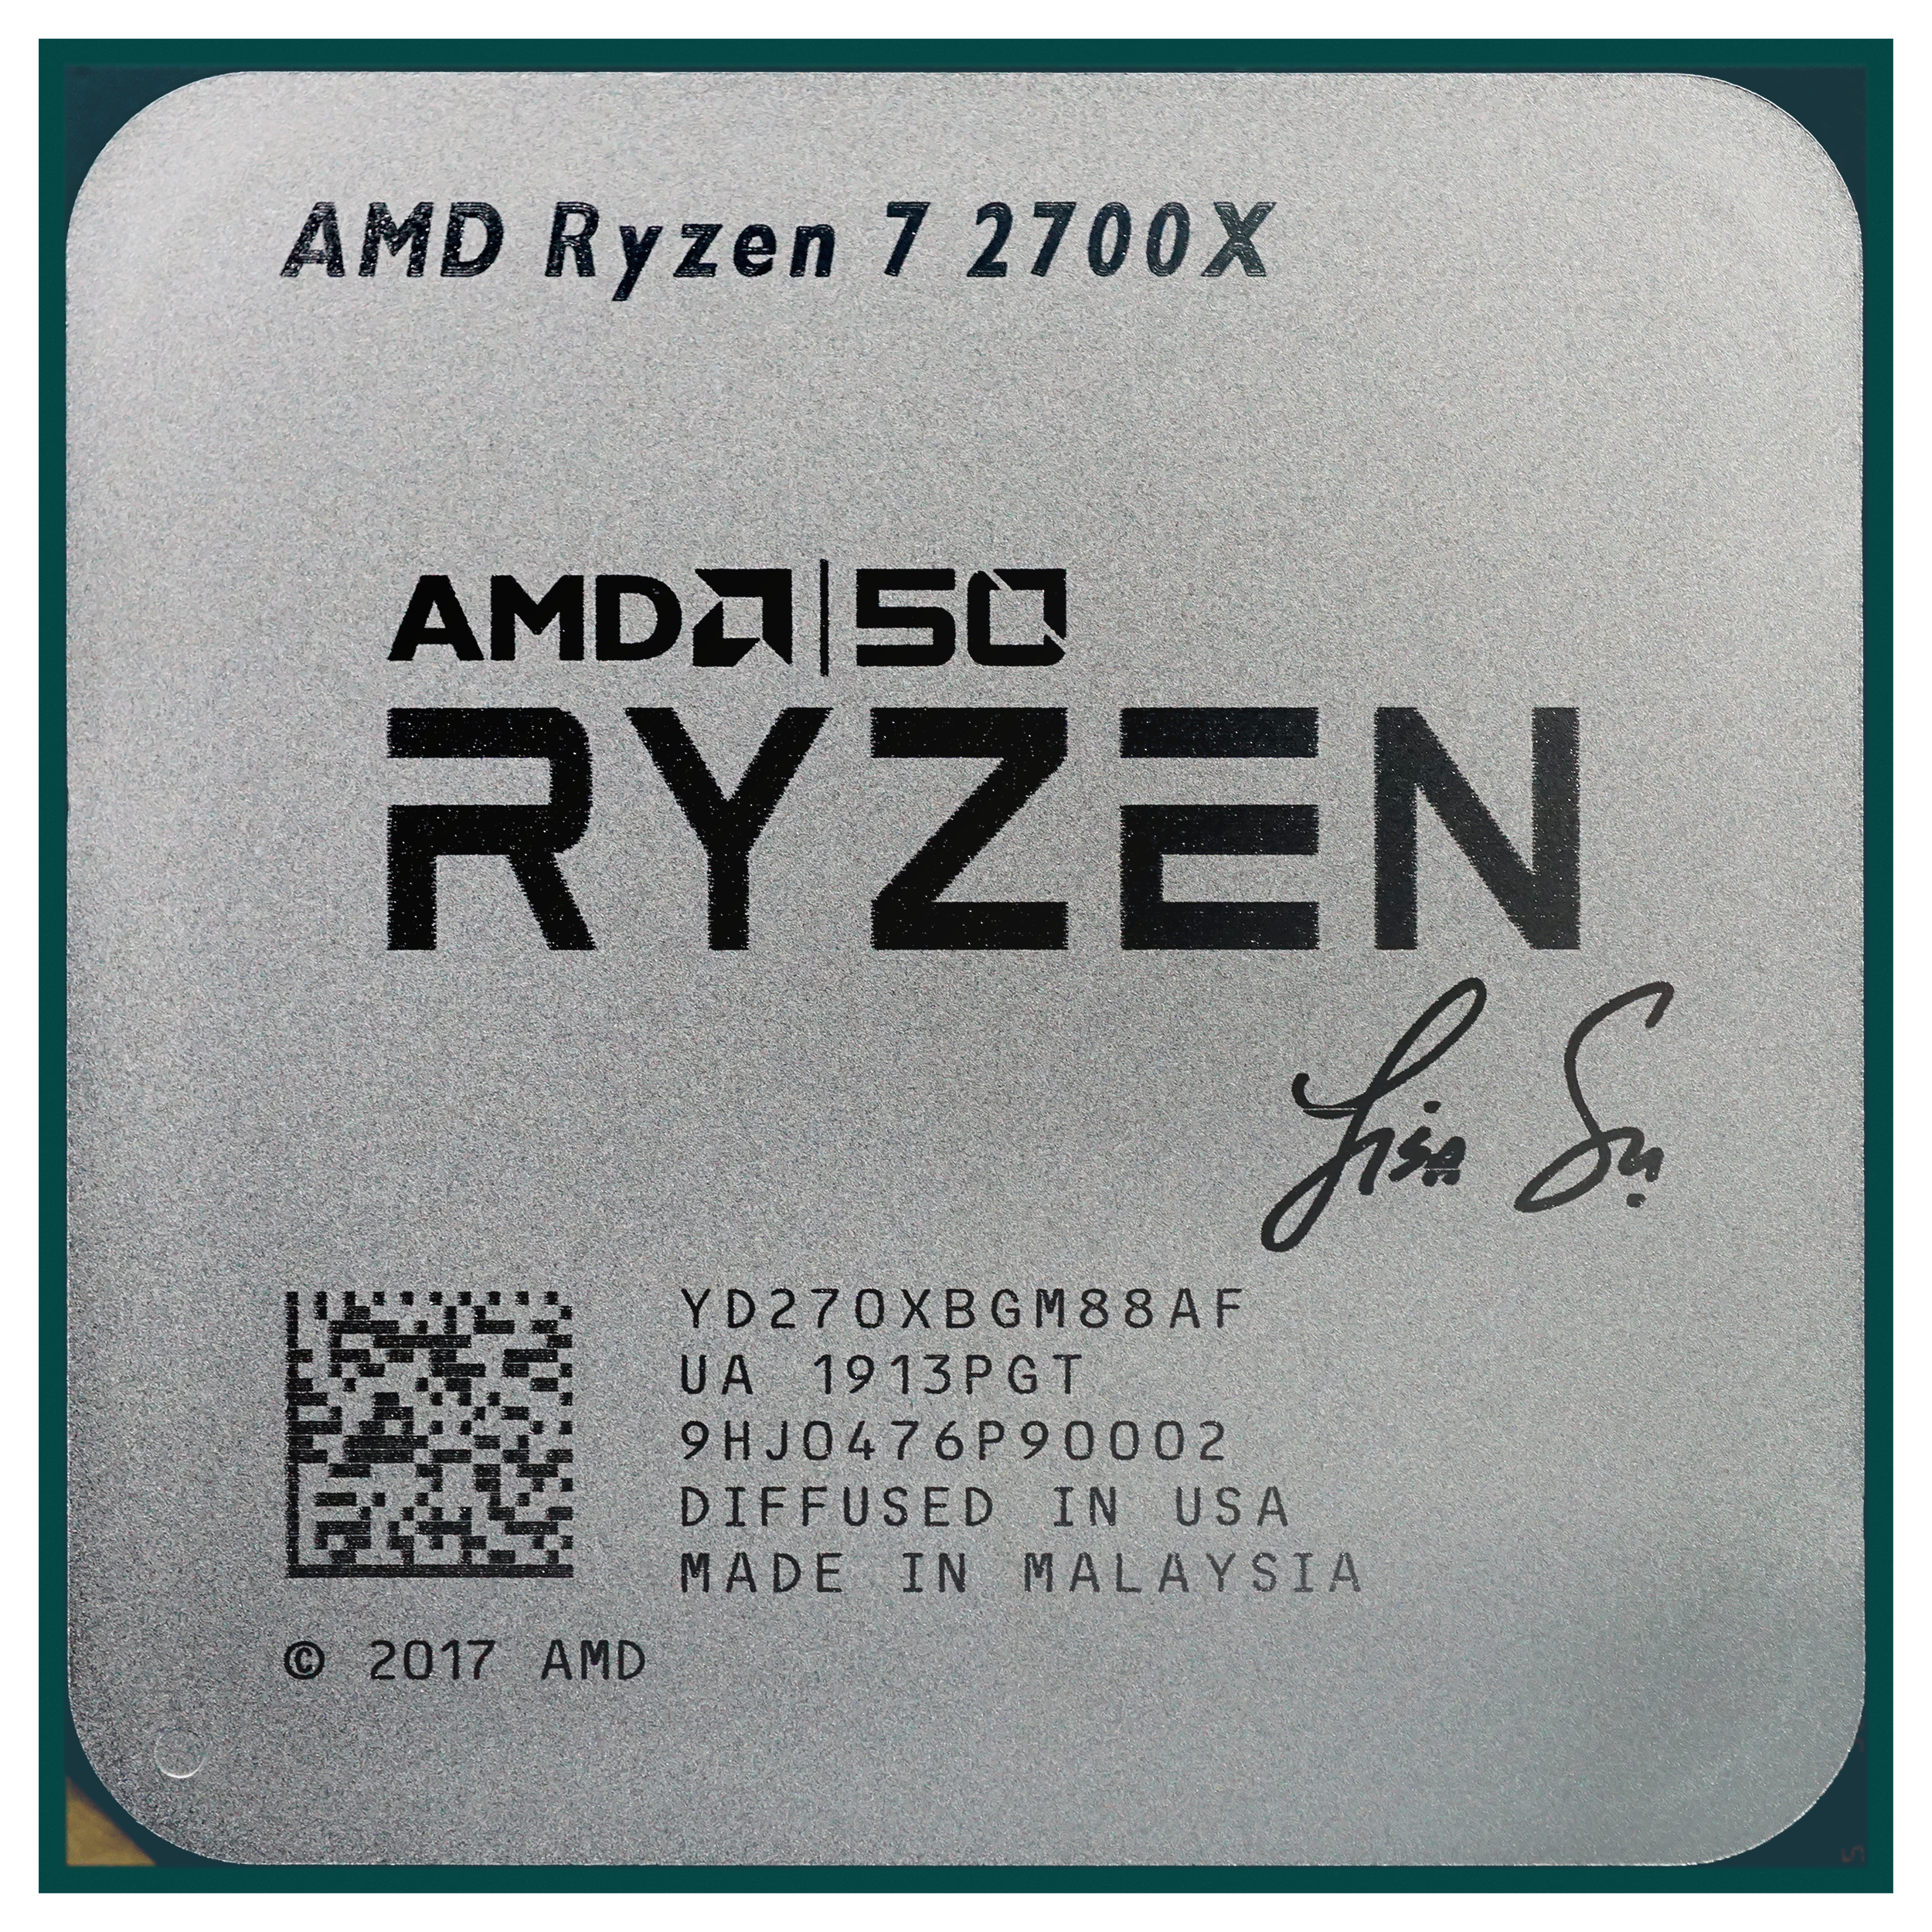 AMD_Ryzen_7_2700X_Lisa Su Signature